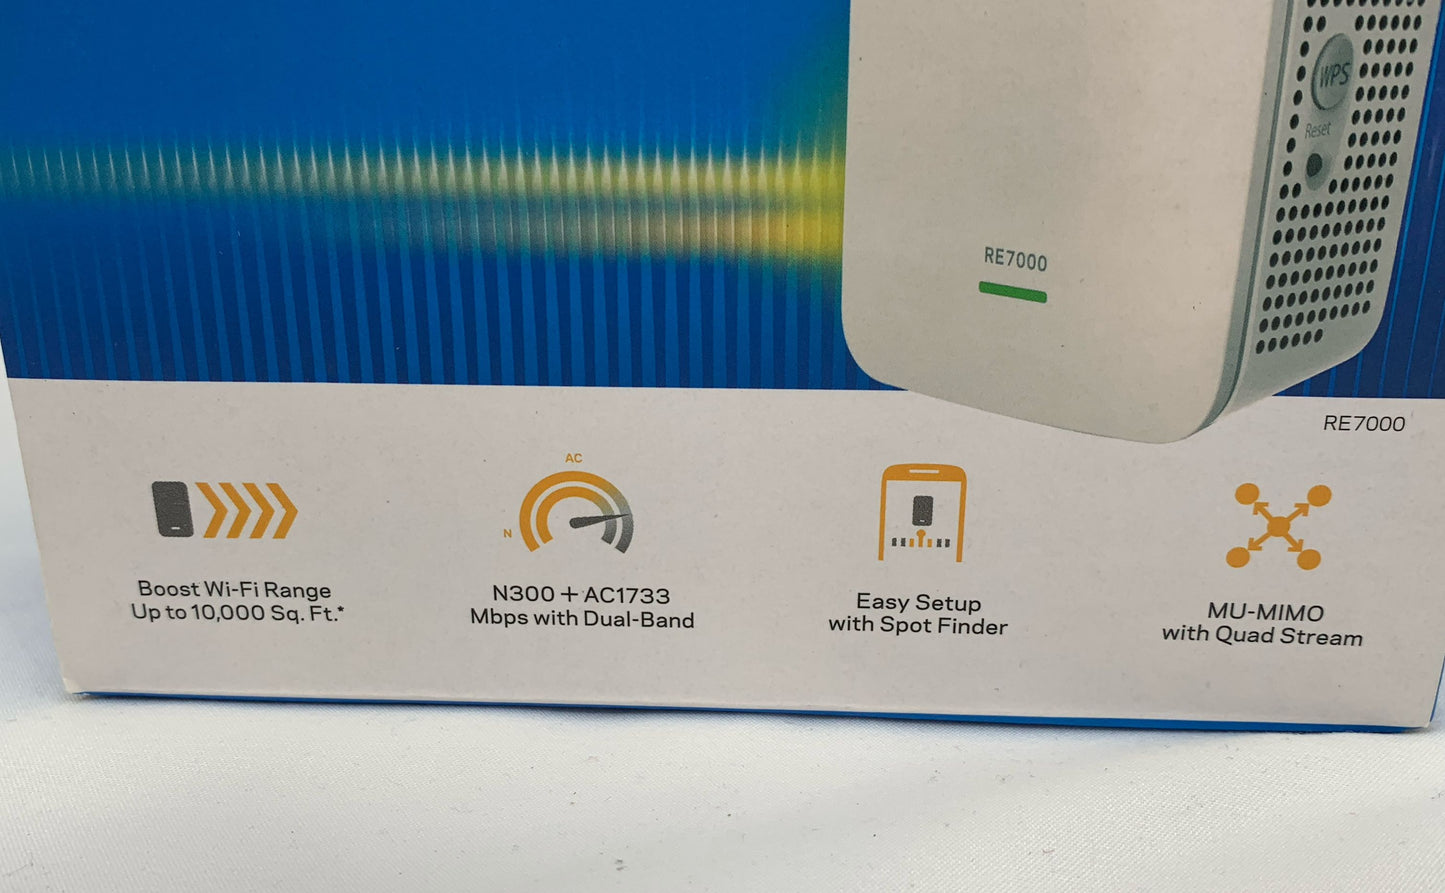 Linksys Next-Gen AC Max-Stream 1900+ Wi-Fi Range Extender Seamless Roaming